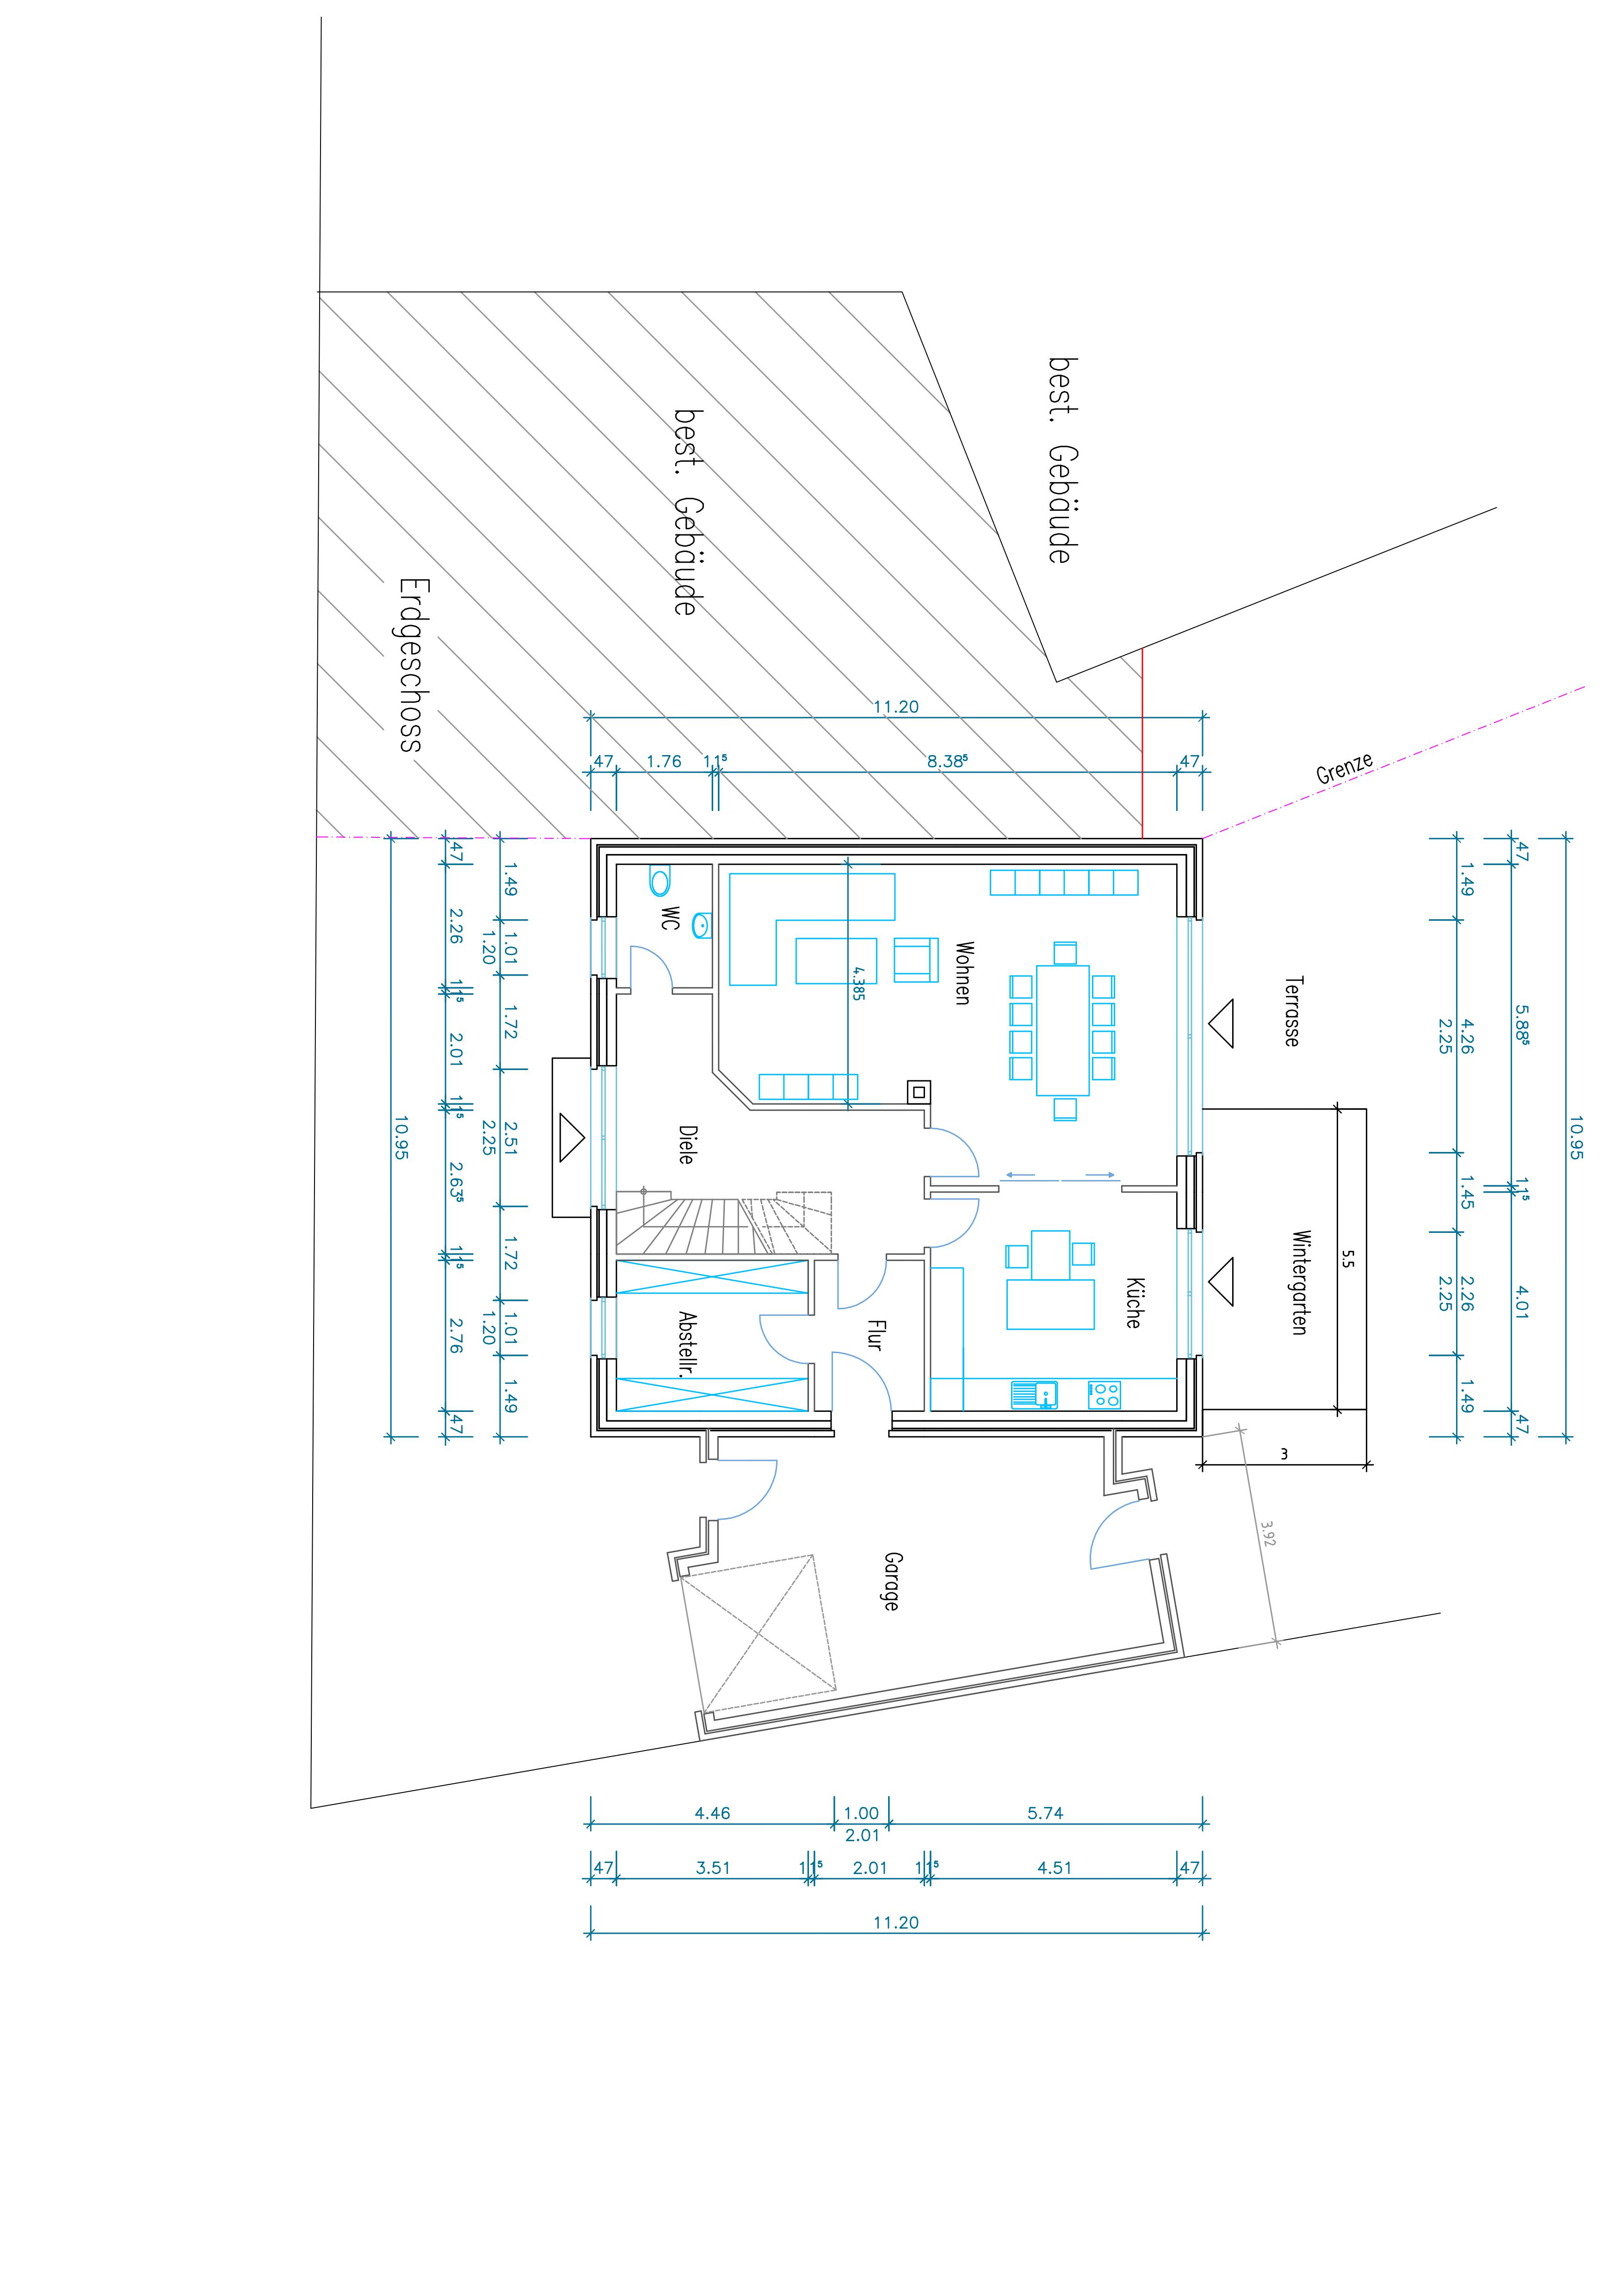 planung-eines-einfamilienhauses-danke-fuer-euer-feedback-160273-1.jpg